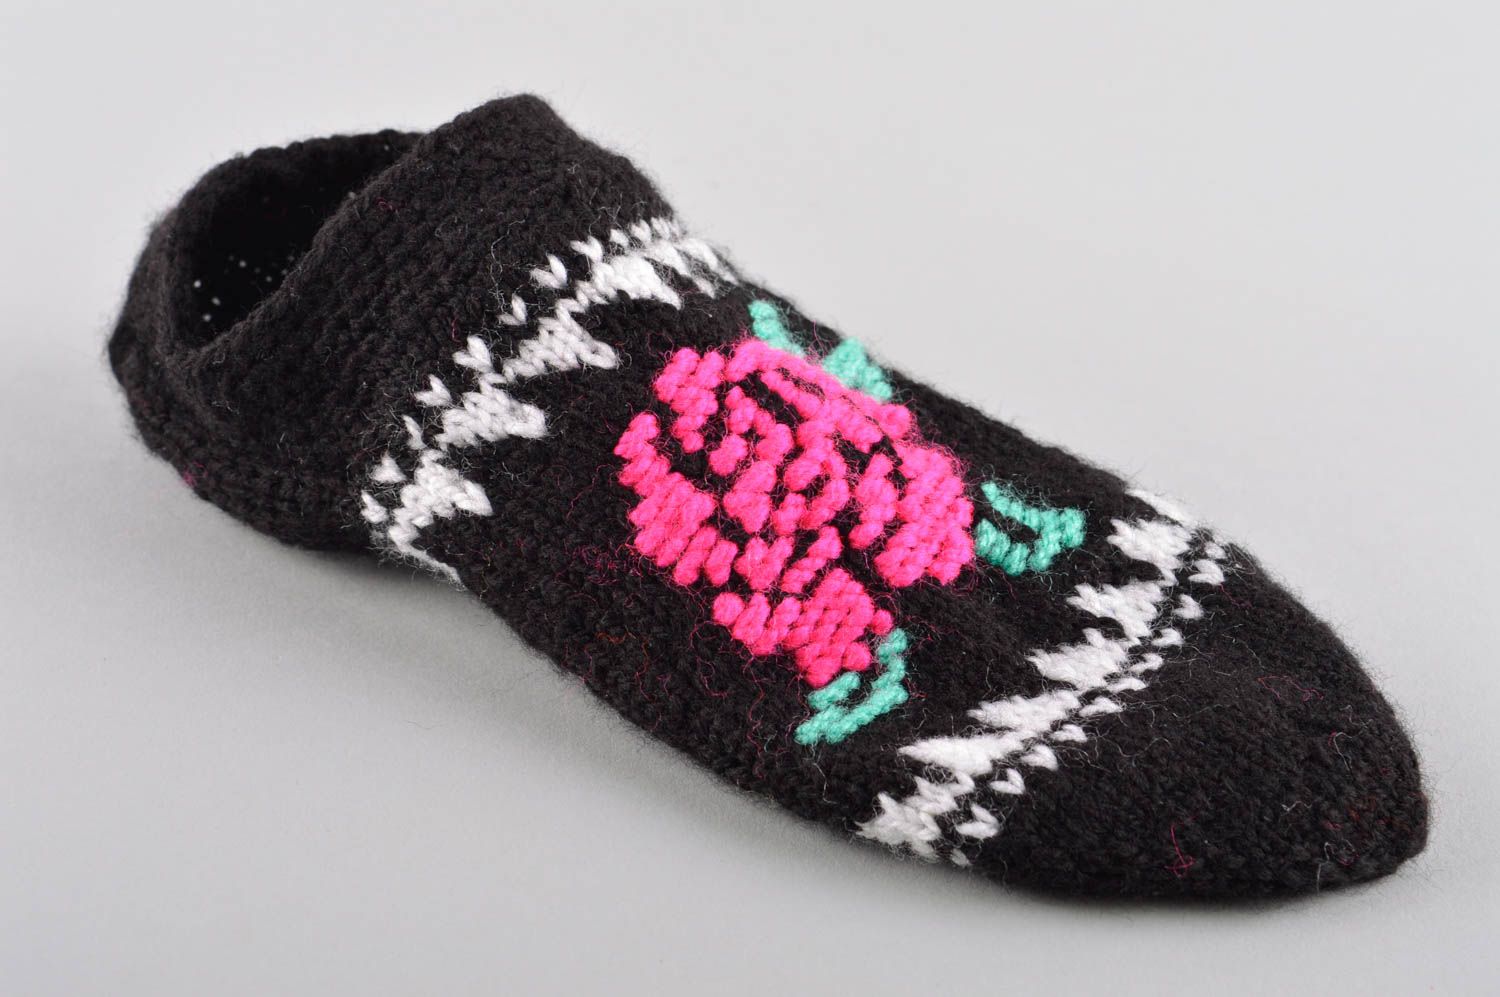 Handmade knitted socks winter socks winter accessories present for friend photo 3